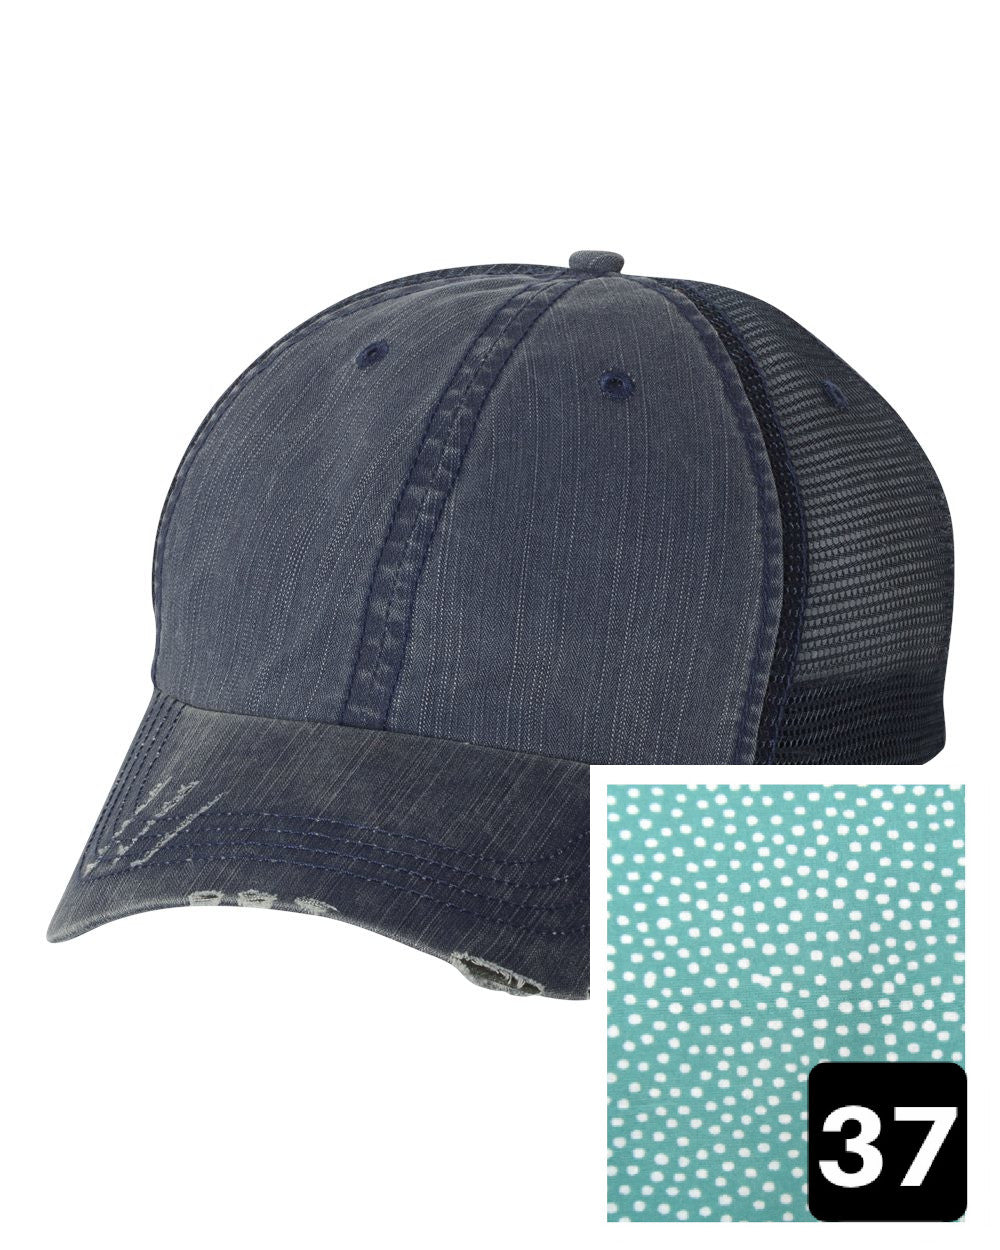 Utah Hat | Navy Distressed Trucker Cap | Many Fabric Choices